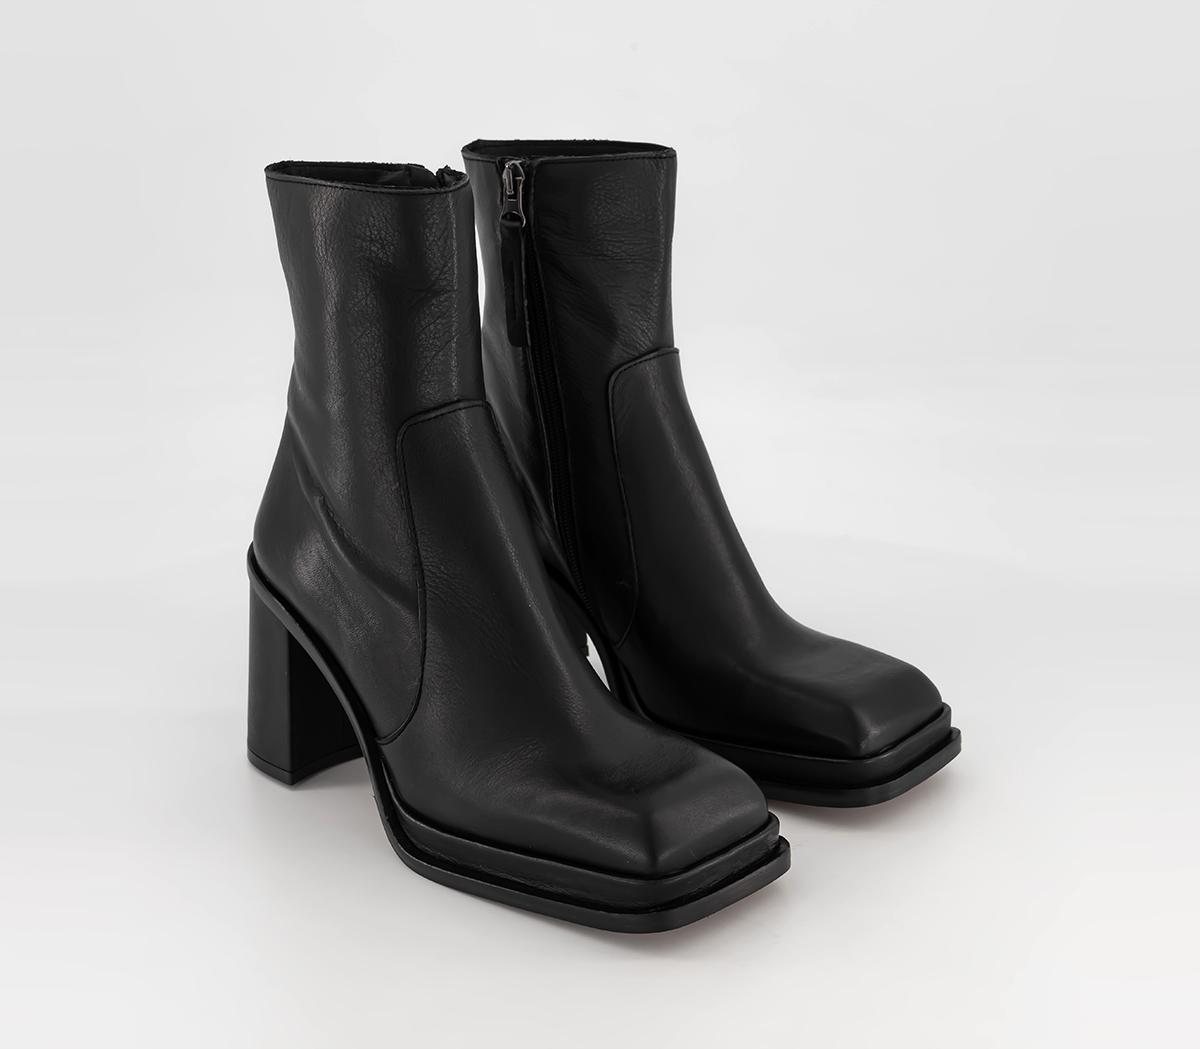 OFFICE Studio Womens Aslan Square Toe Heel Boots Black Leather, 7